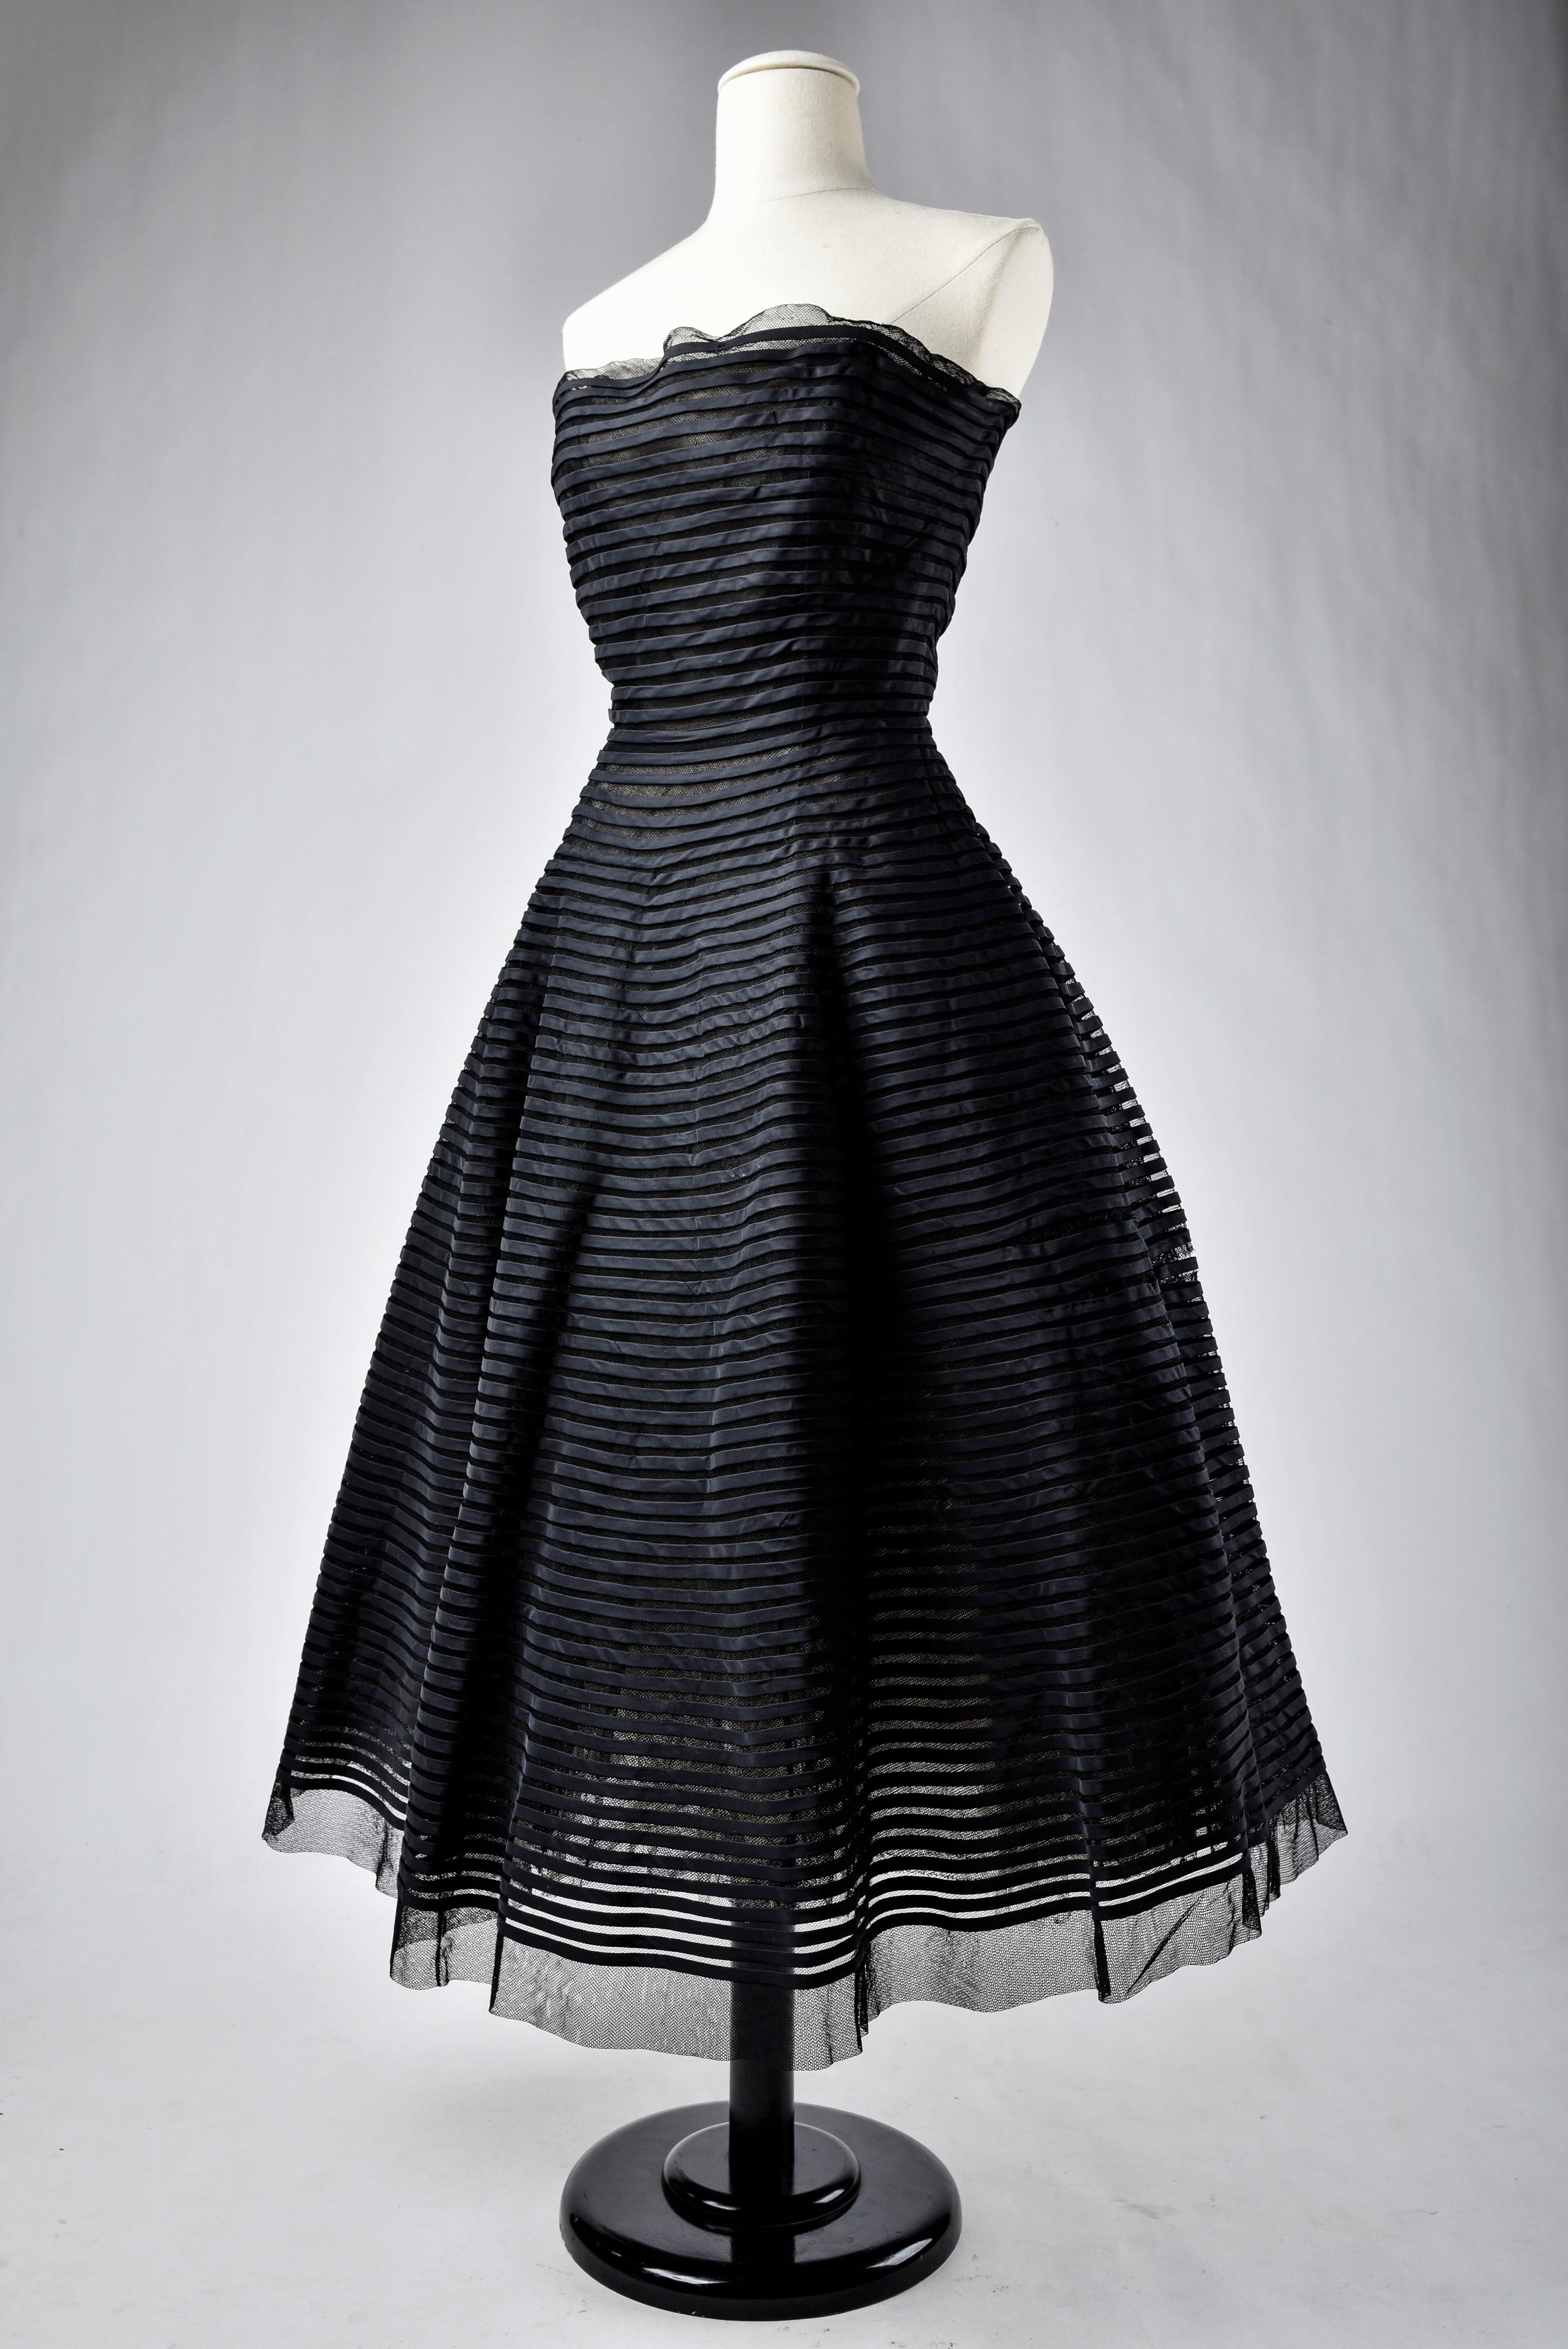 Christian Dior Ball Gown in black tulle & satin appliqué N° 363404 Circa 1955 3